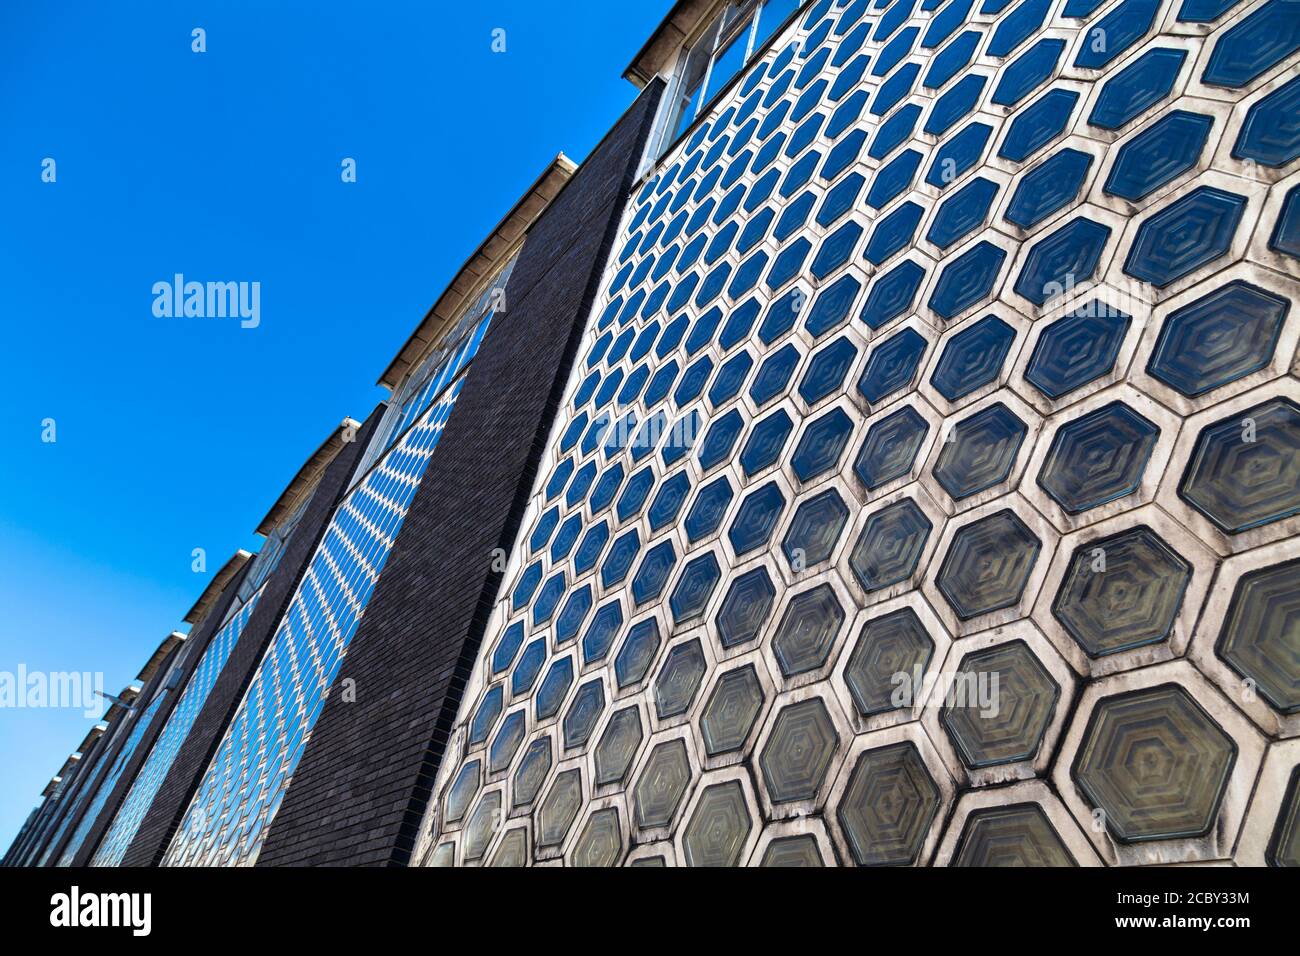 Hexagonal glass tiles on the facade of Smithfield Poultry Market, Farringdon, London, UK Stock Photo